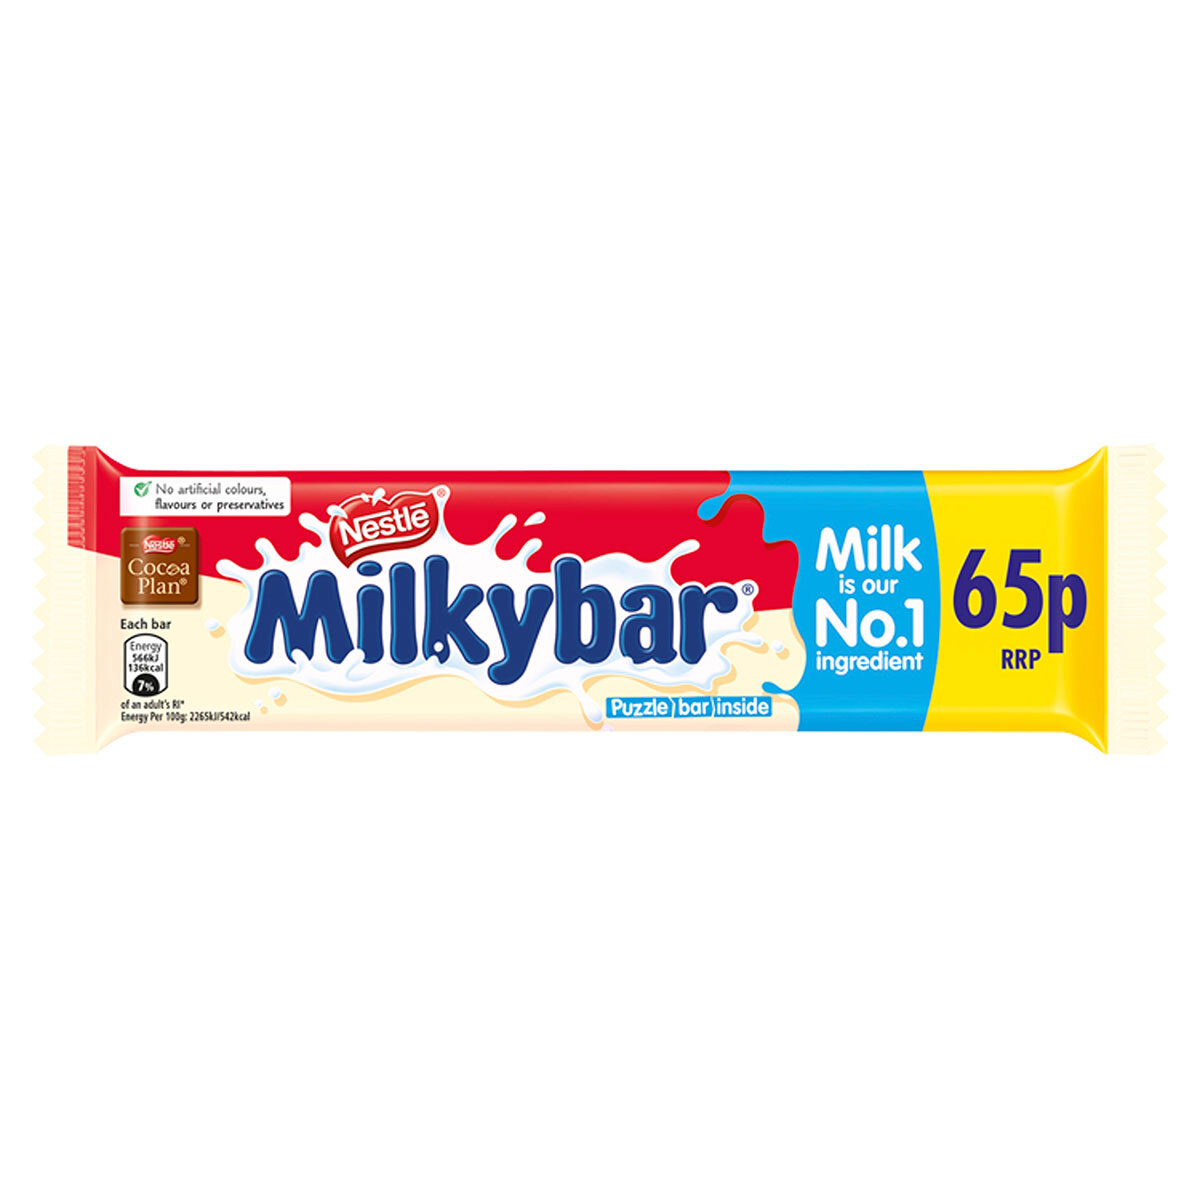 Milkybar PMP 65p, 25g